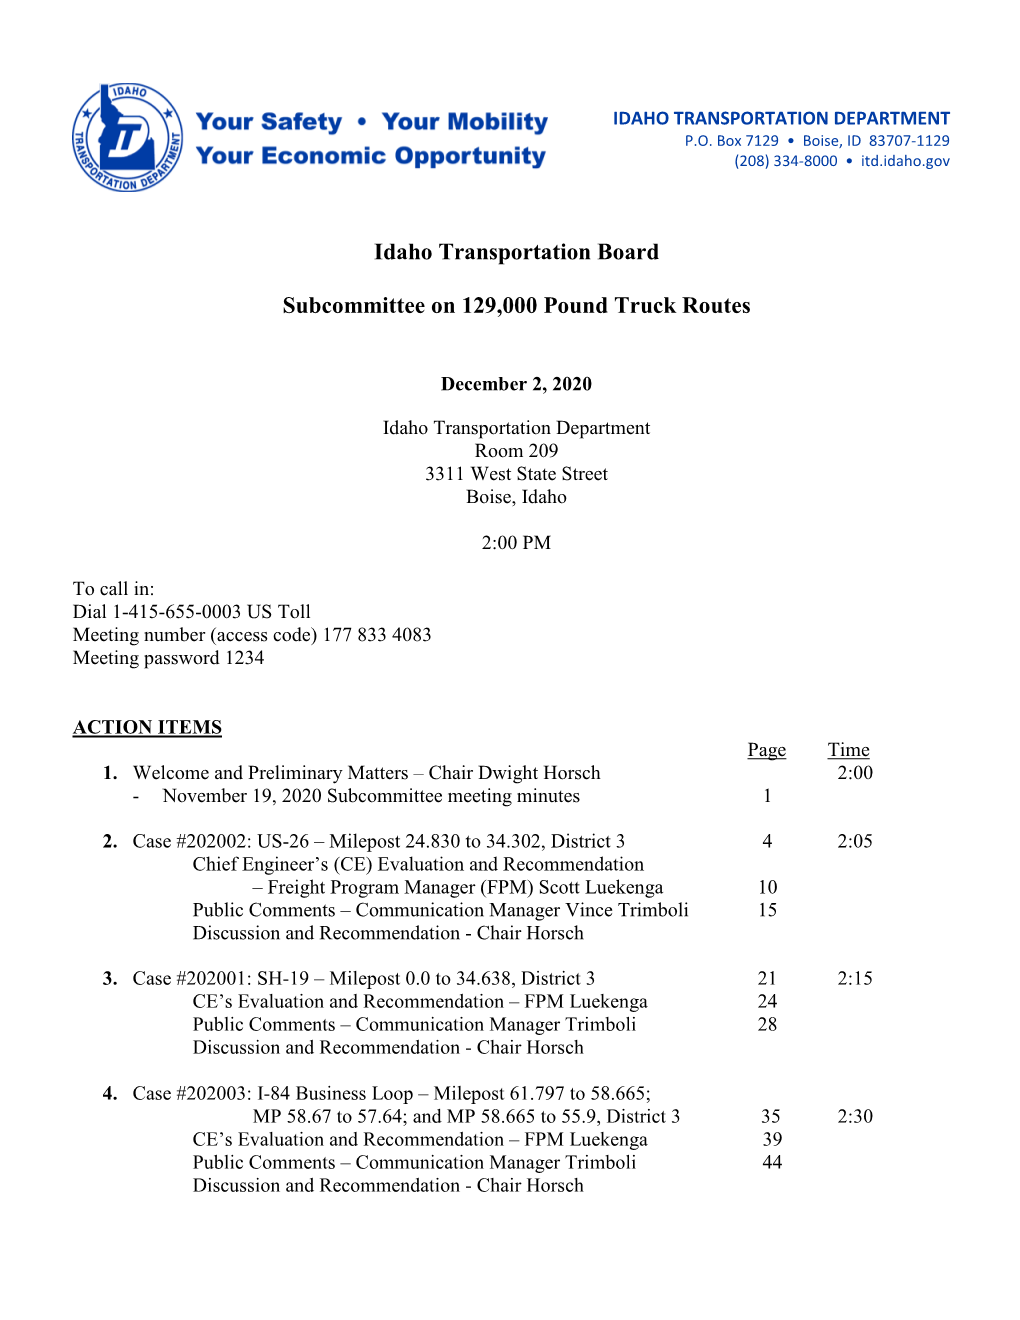 Idaho Transportation Board Subcommittee on 129,000 Pound